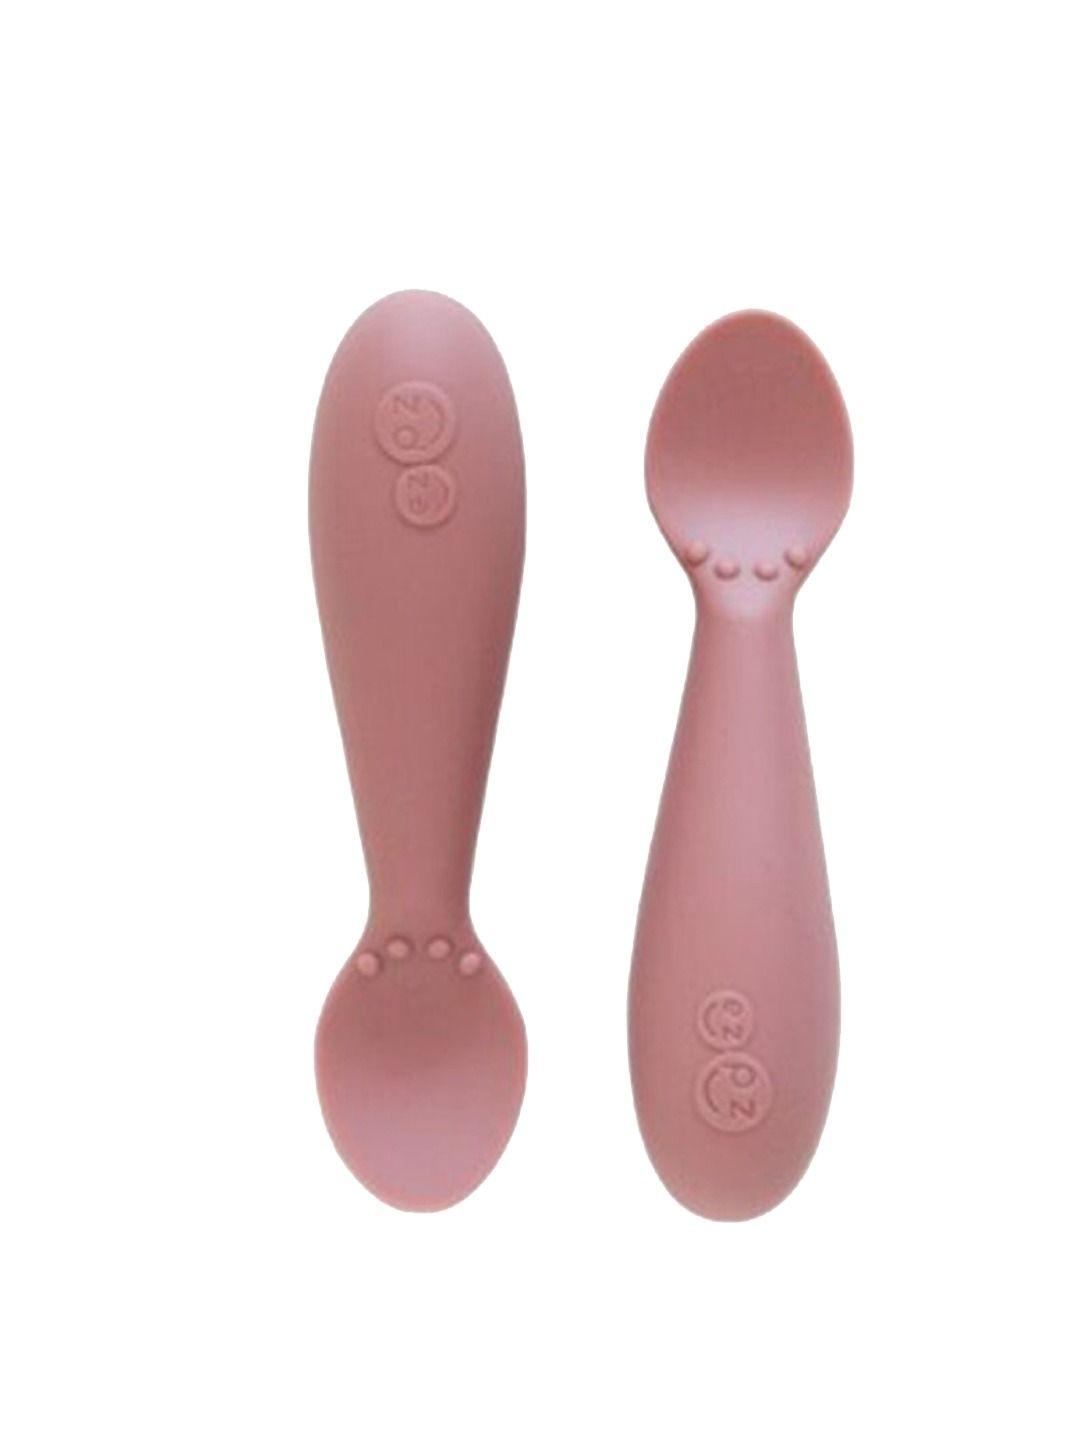 ezpz kids set of 2 pink silicon spoon